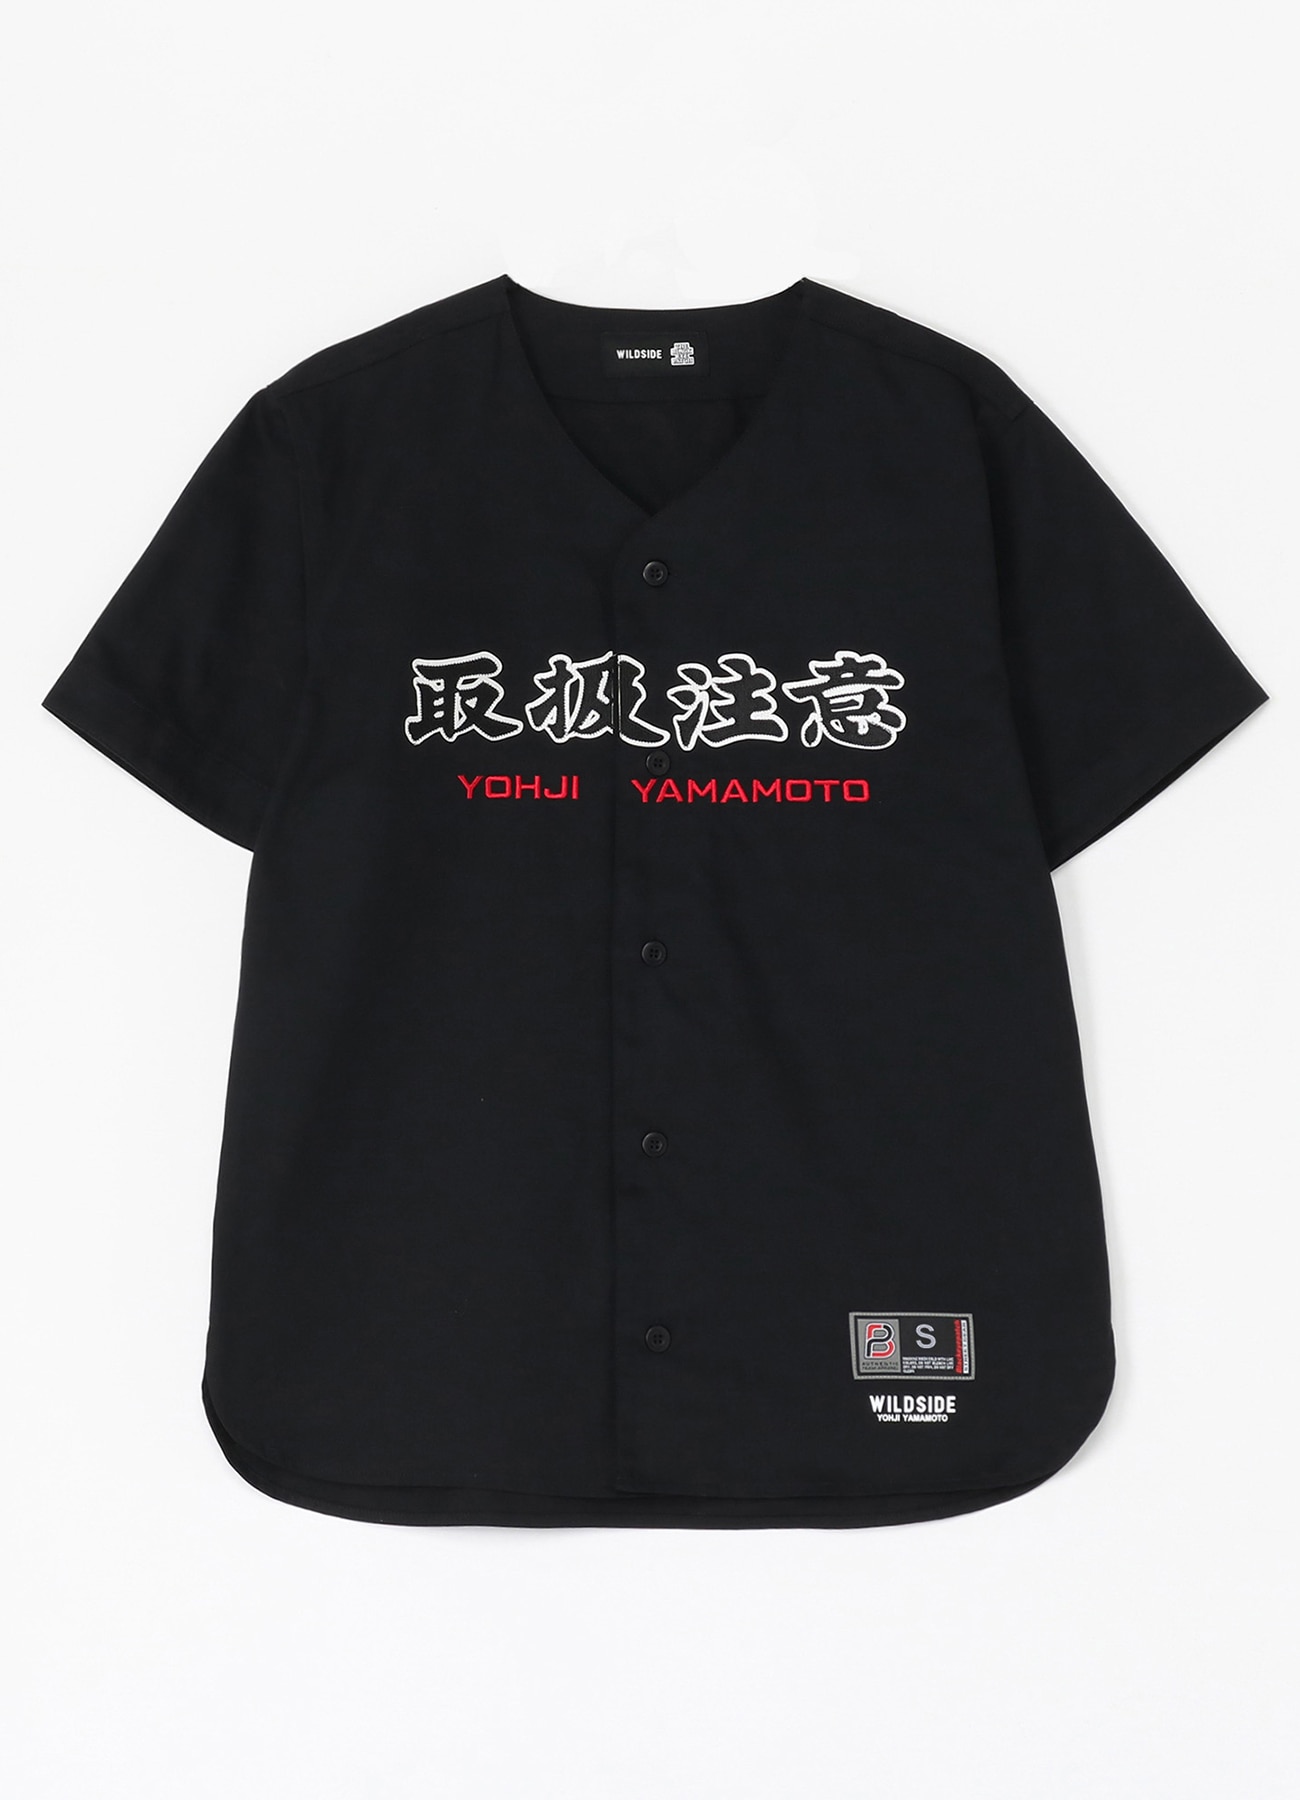 WILDSIDE × BlackEyePatch NOIR EYE PATCH Baseball T-shirt